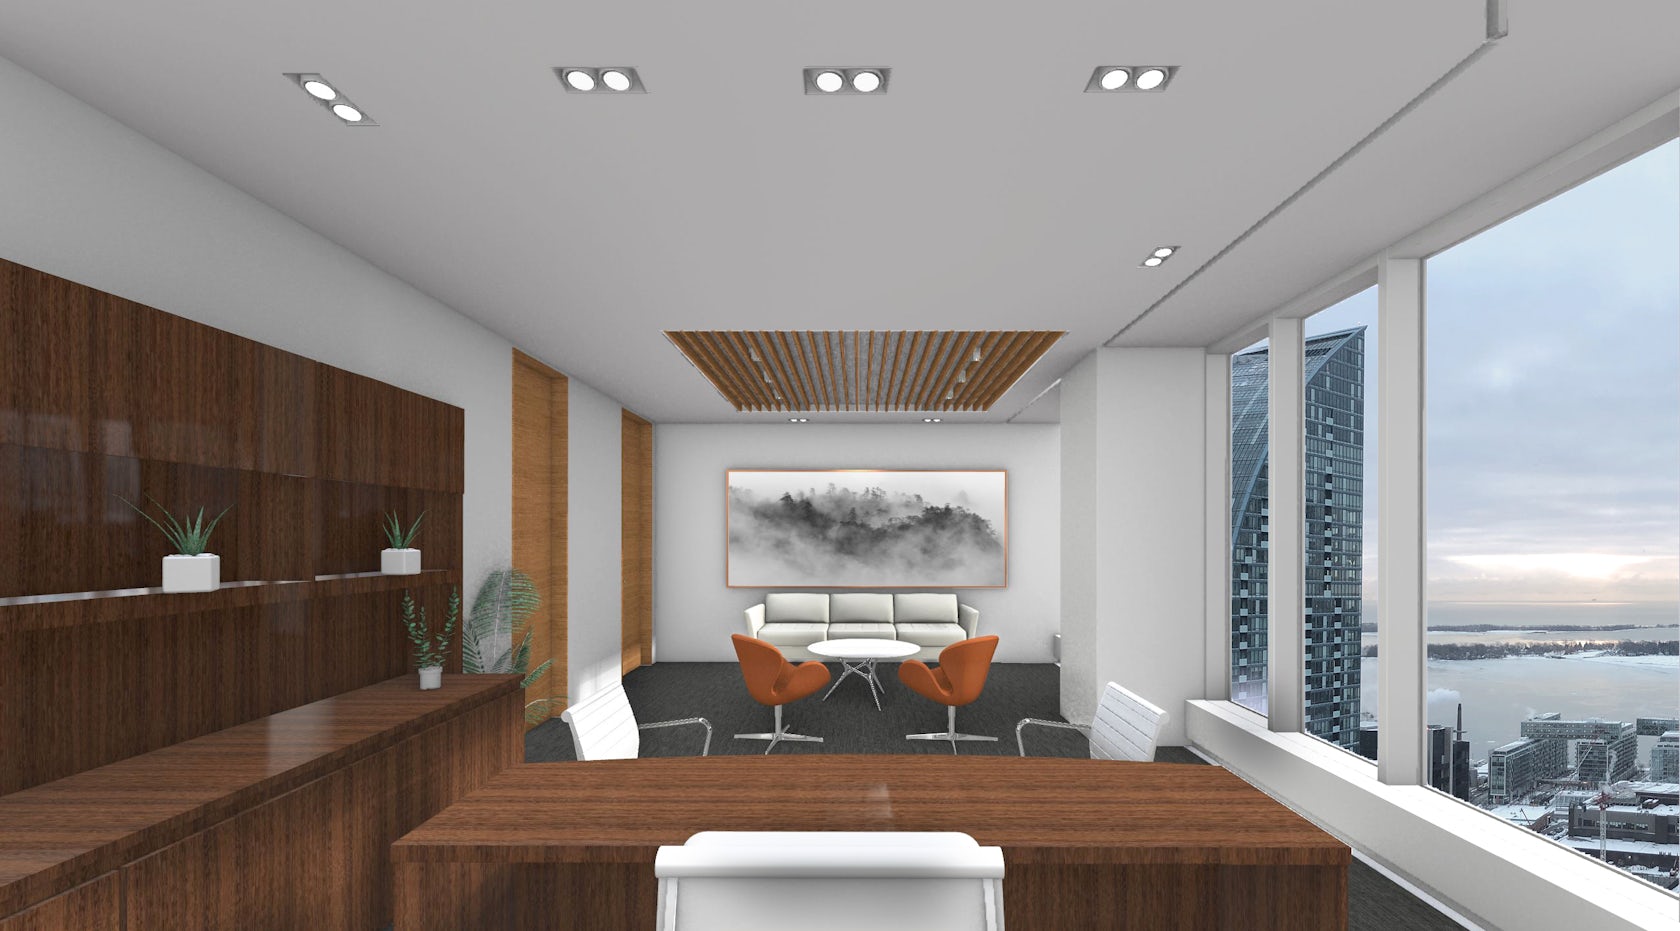 Louis Vuitton Corporate Office - Toronto by dkstudio architects inc. -  Architizer